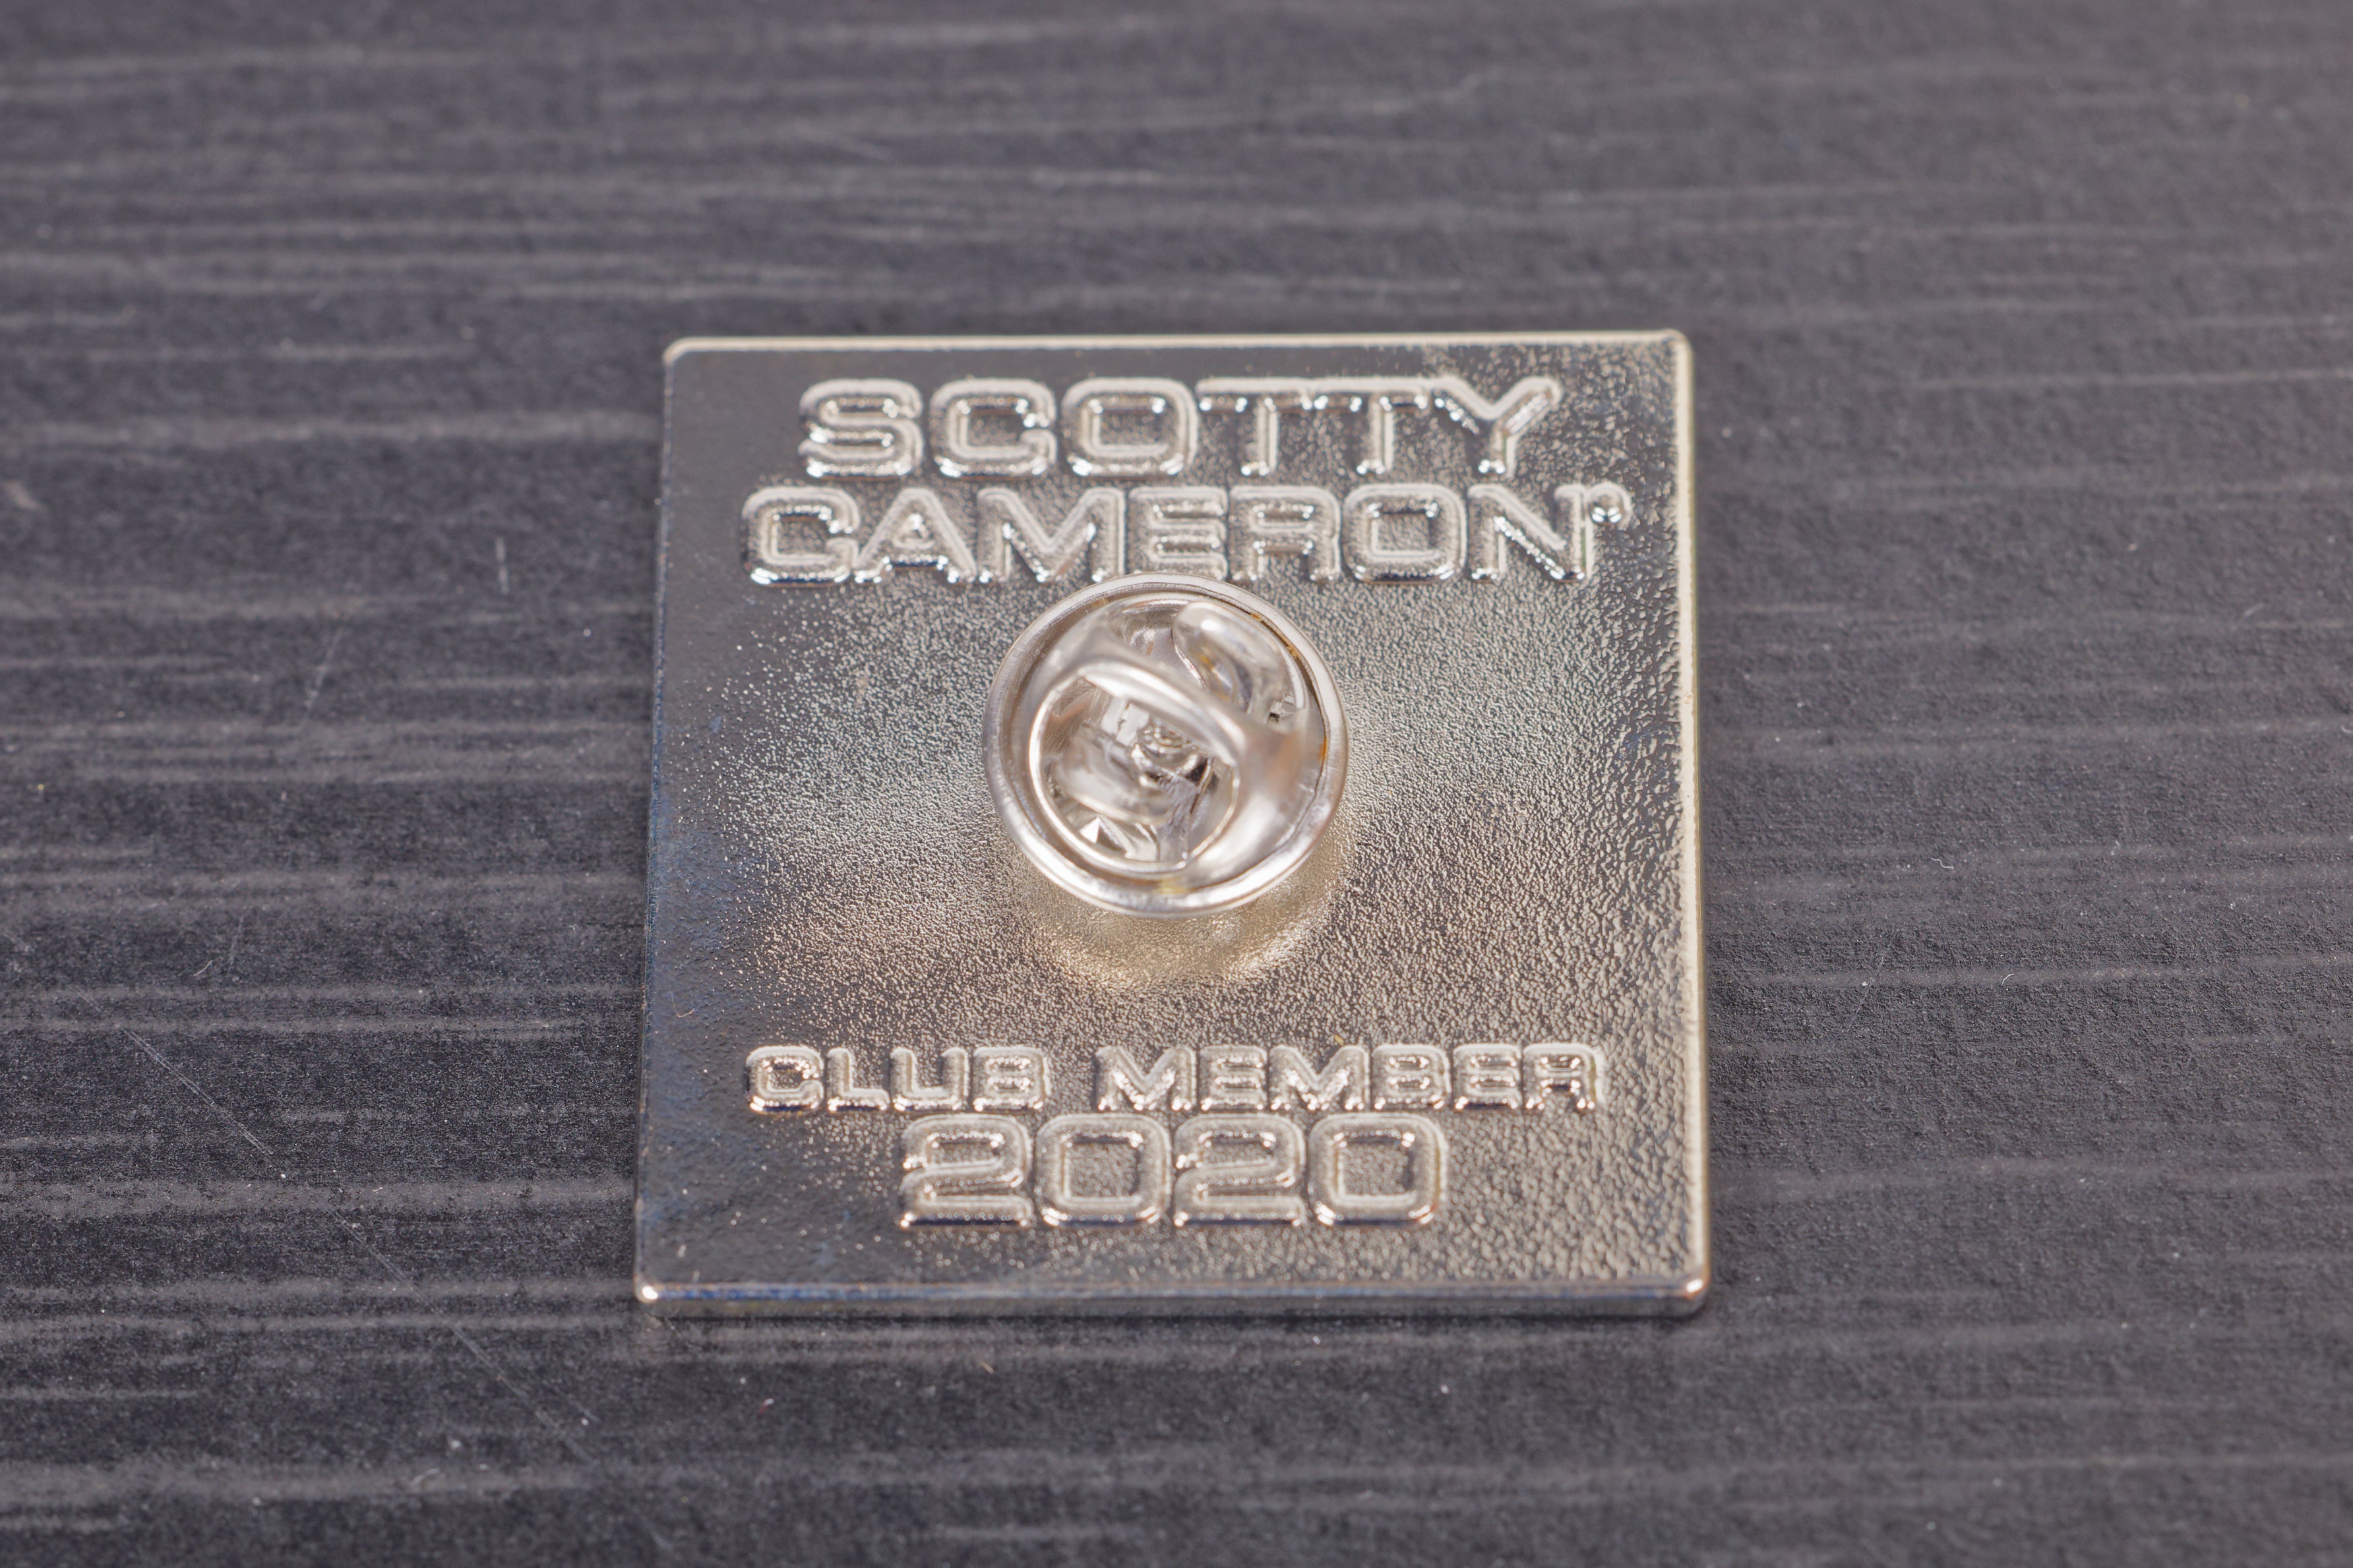 2020 Club Cameron Pin Badge